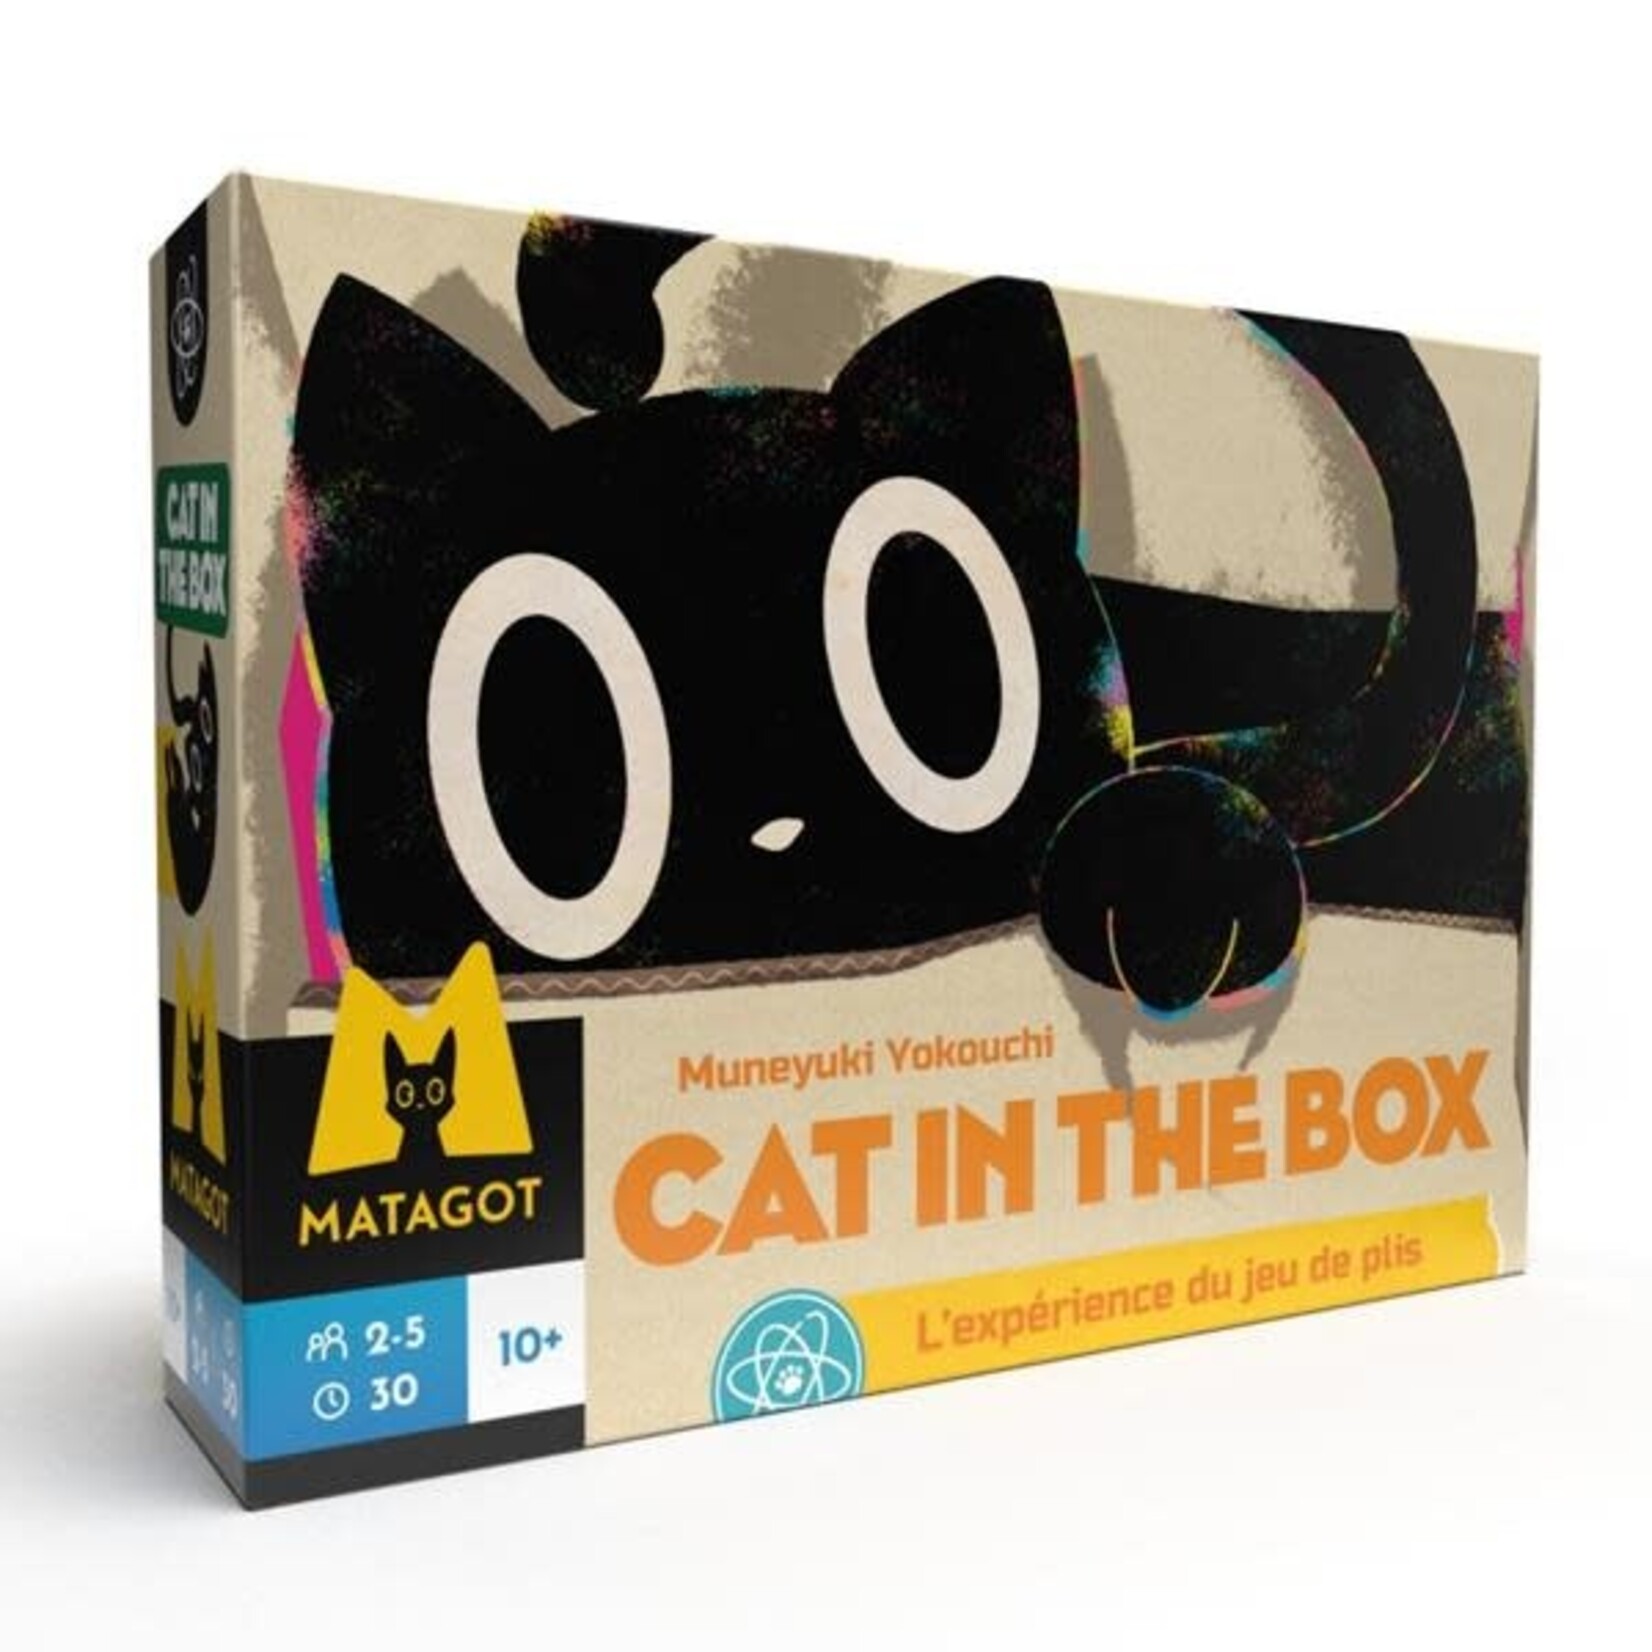 Matagot Cat in the Box (l'expérience du jeu de pli)